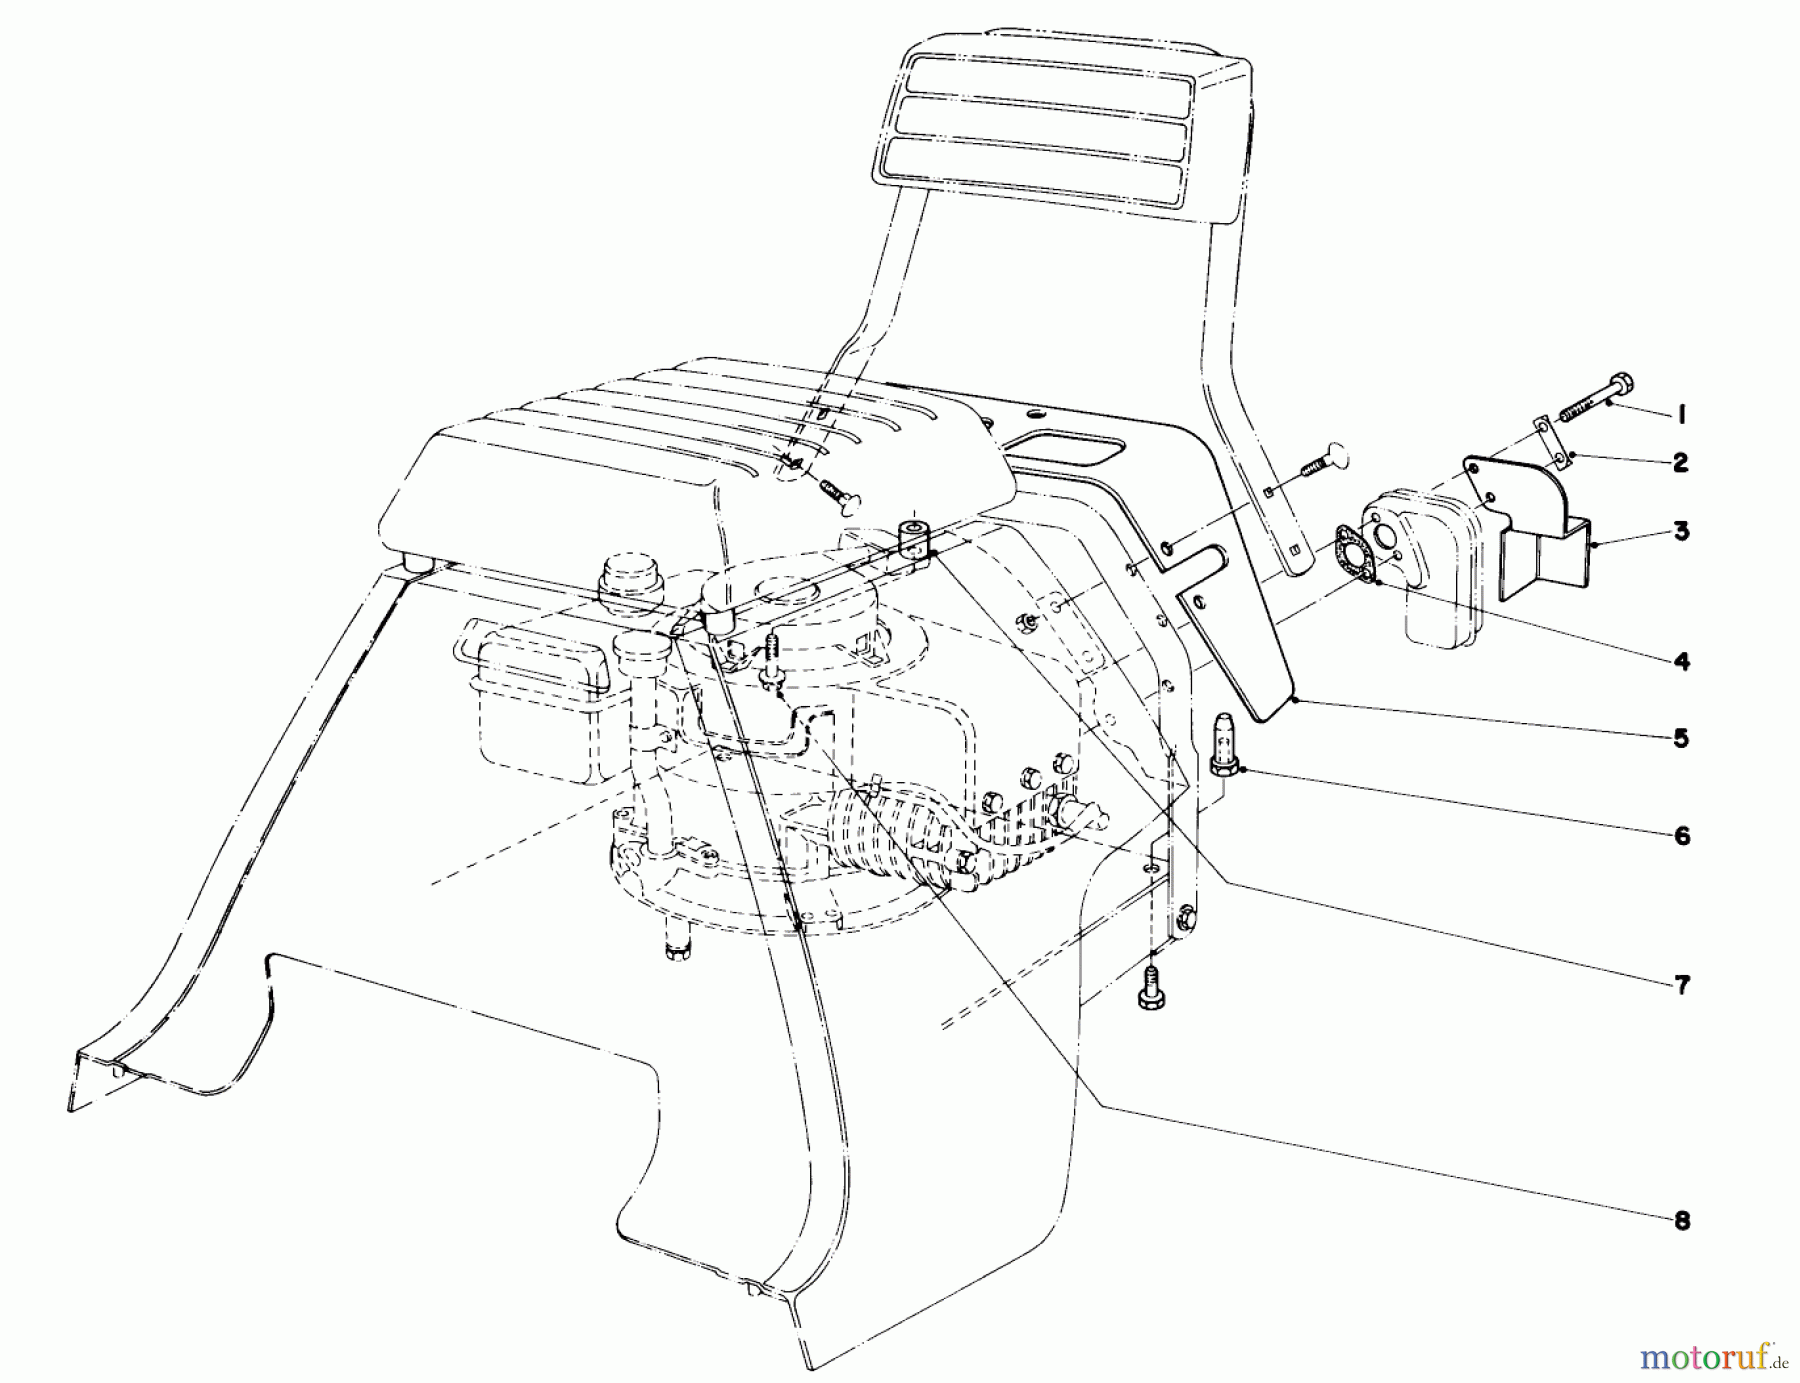  Toro Neu Accessories, Mower 25-3050 - Toro Retrofit Kit, 5 hp Rear Engine Rider RETRO FIT AUX. KIT 5 H.P. PREMIUM RIDERS